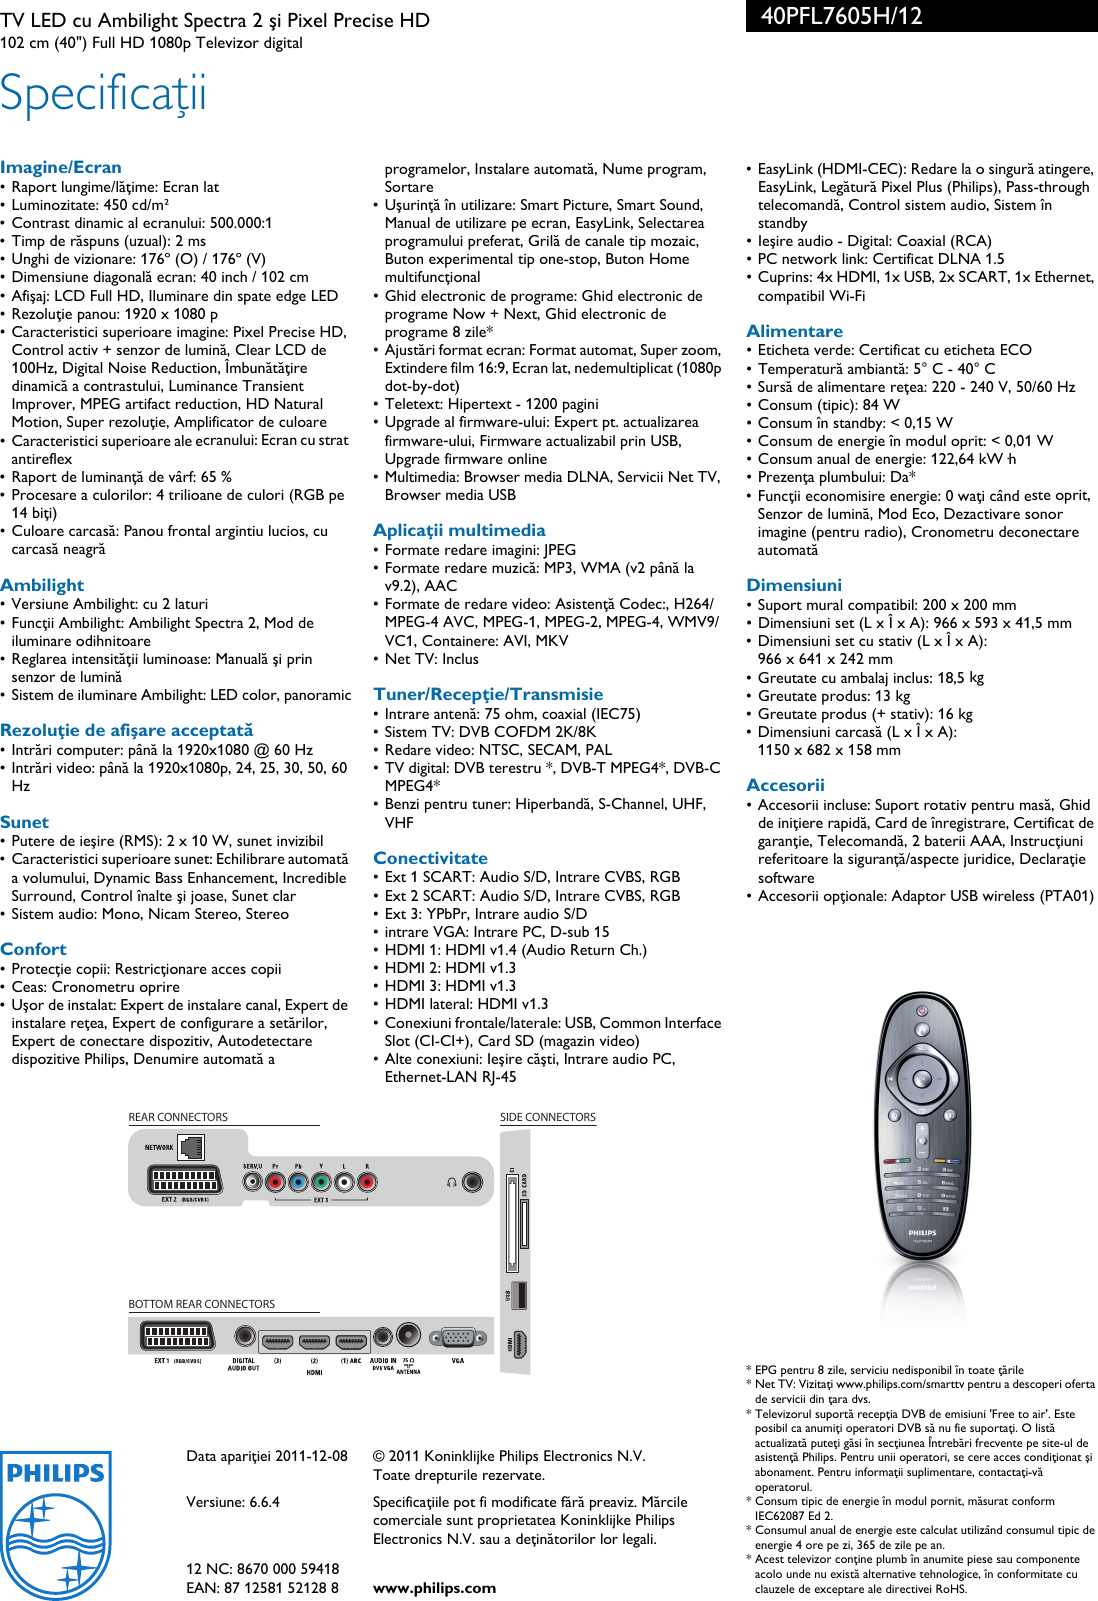 Page 3 of 3 - Philips 40PFL7605H/12 TV LED Cu Ambilight Spectra 2 şi Pixel Precise HD Åi ... 40pfl7605h 12 Pss Ronro